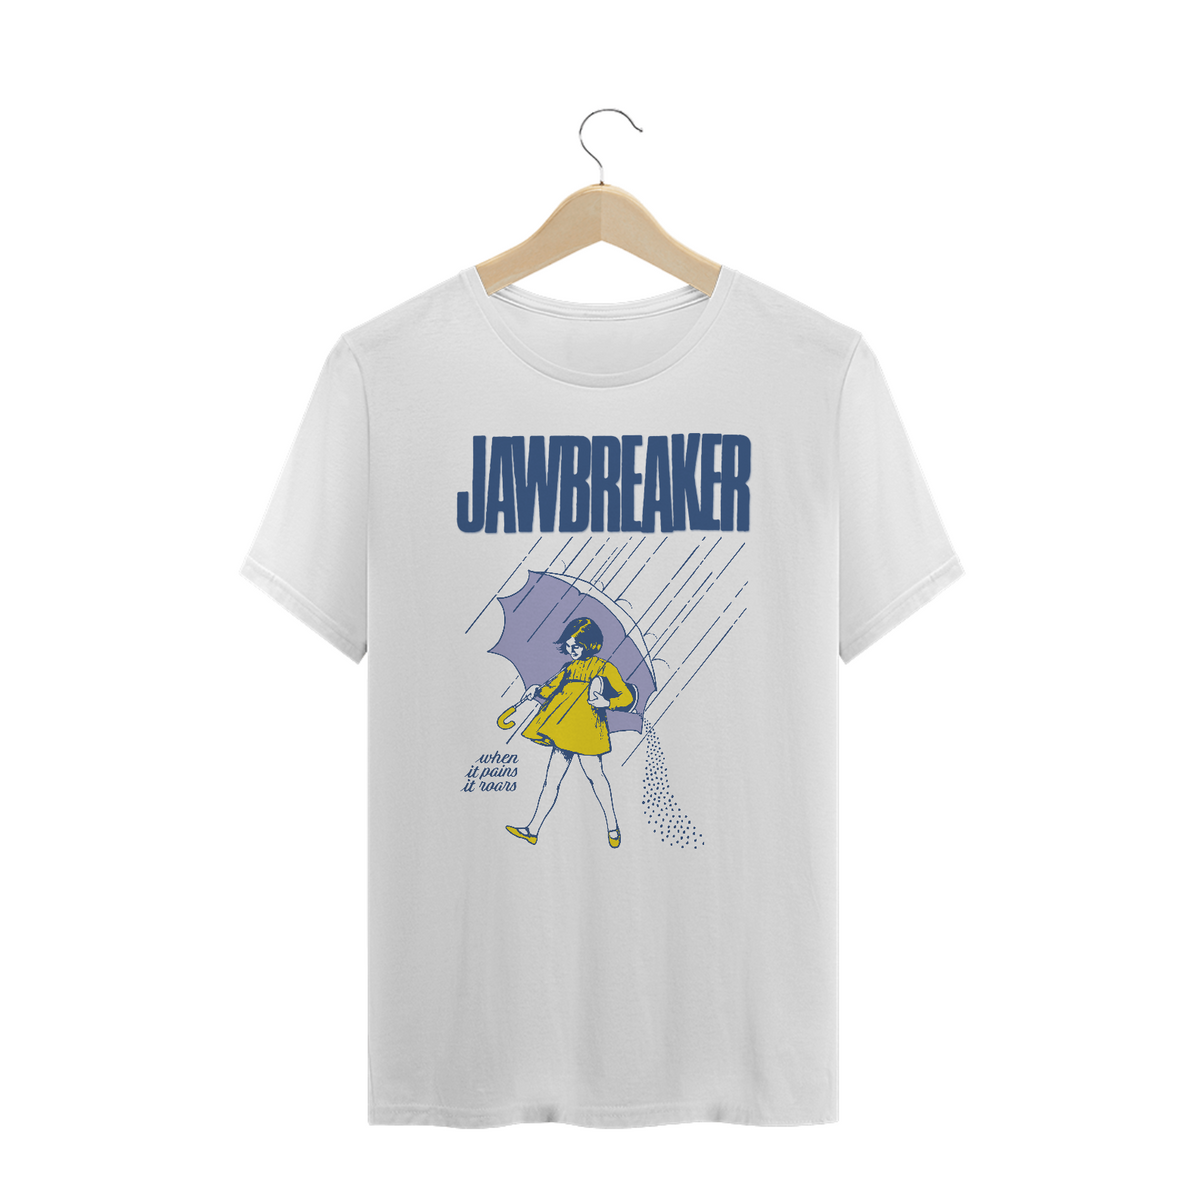 Nome do produto: Jawbreaker - Plus Size